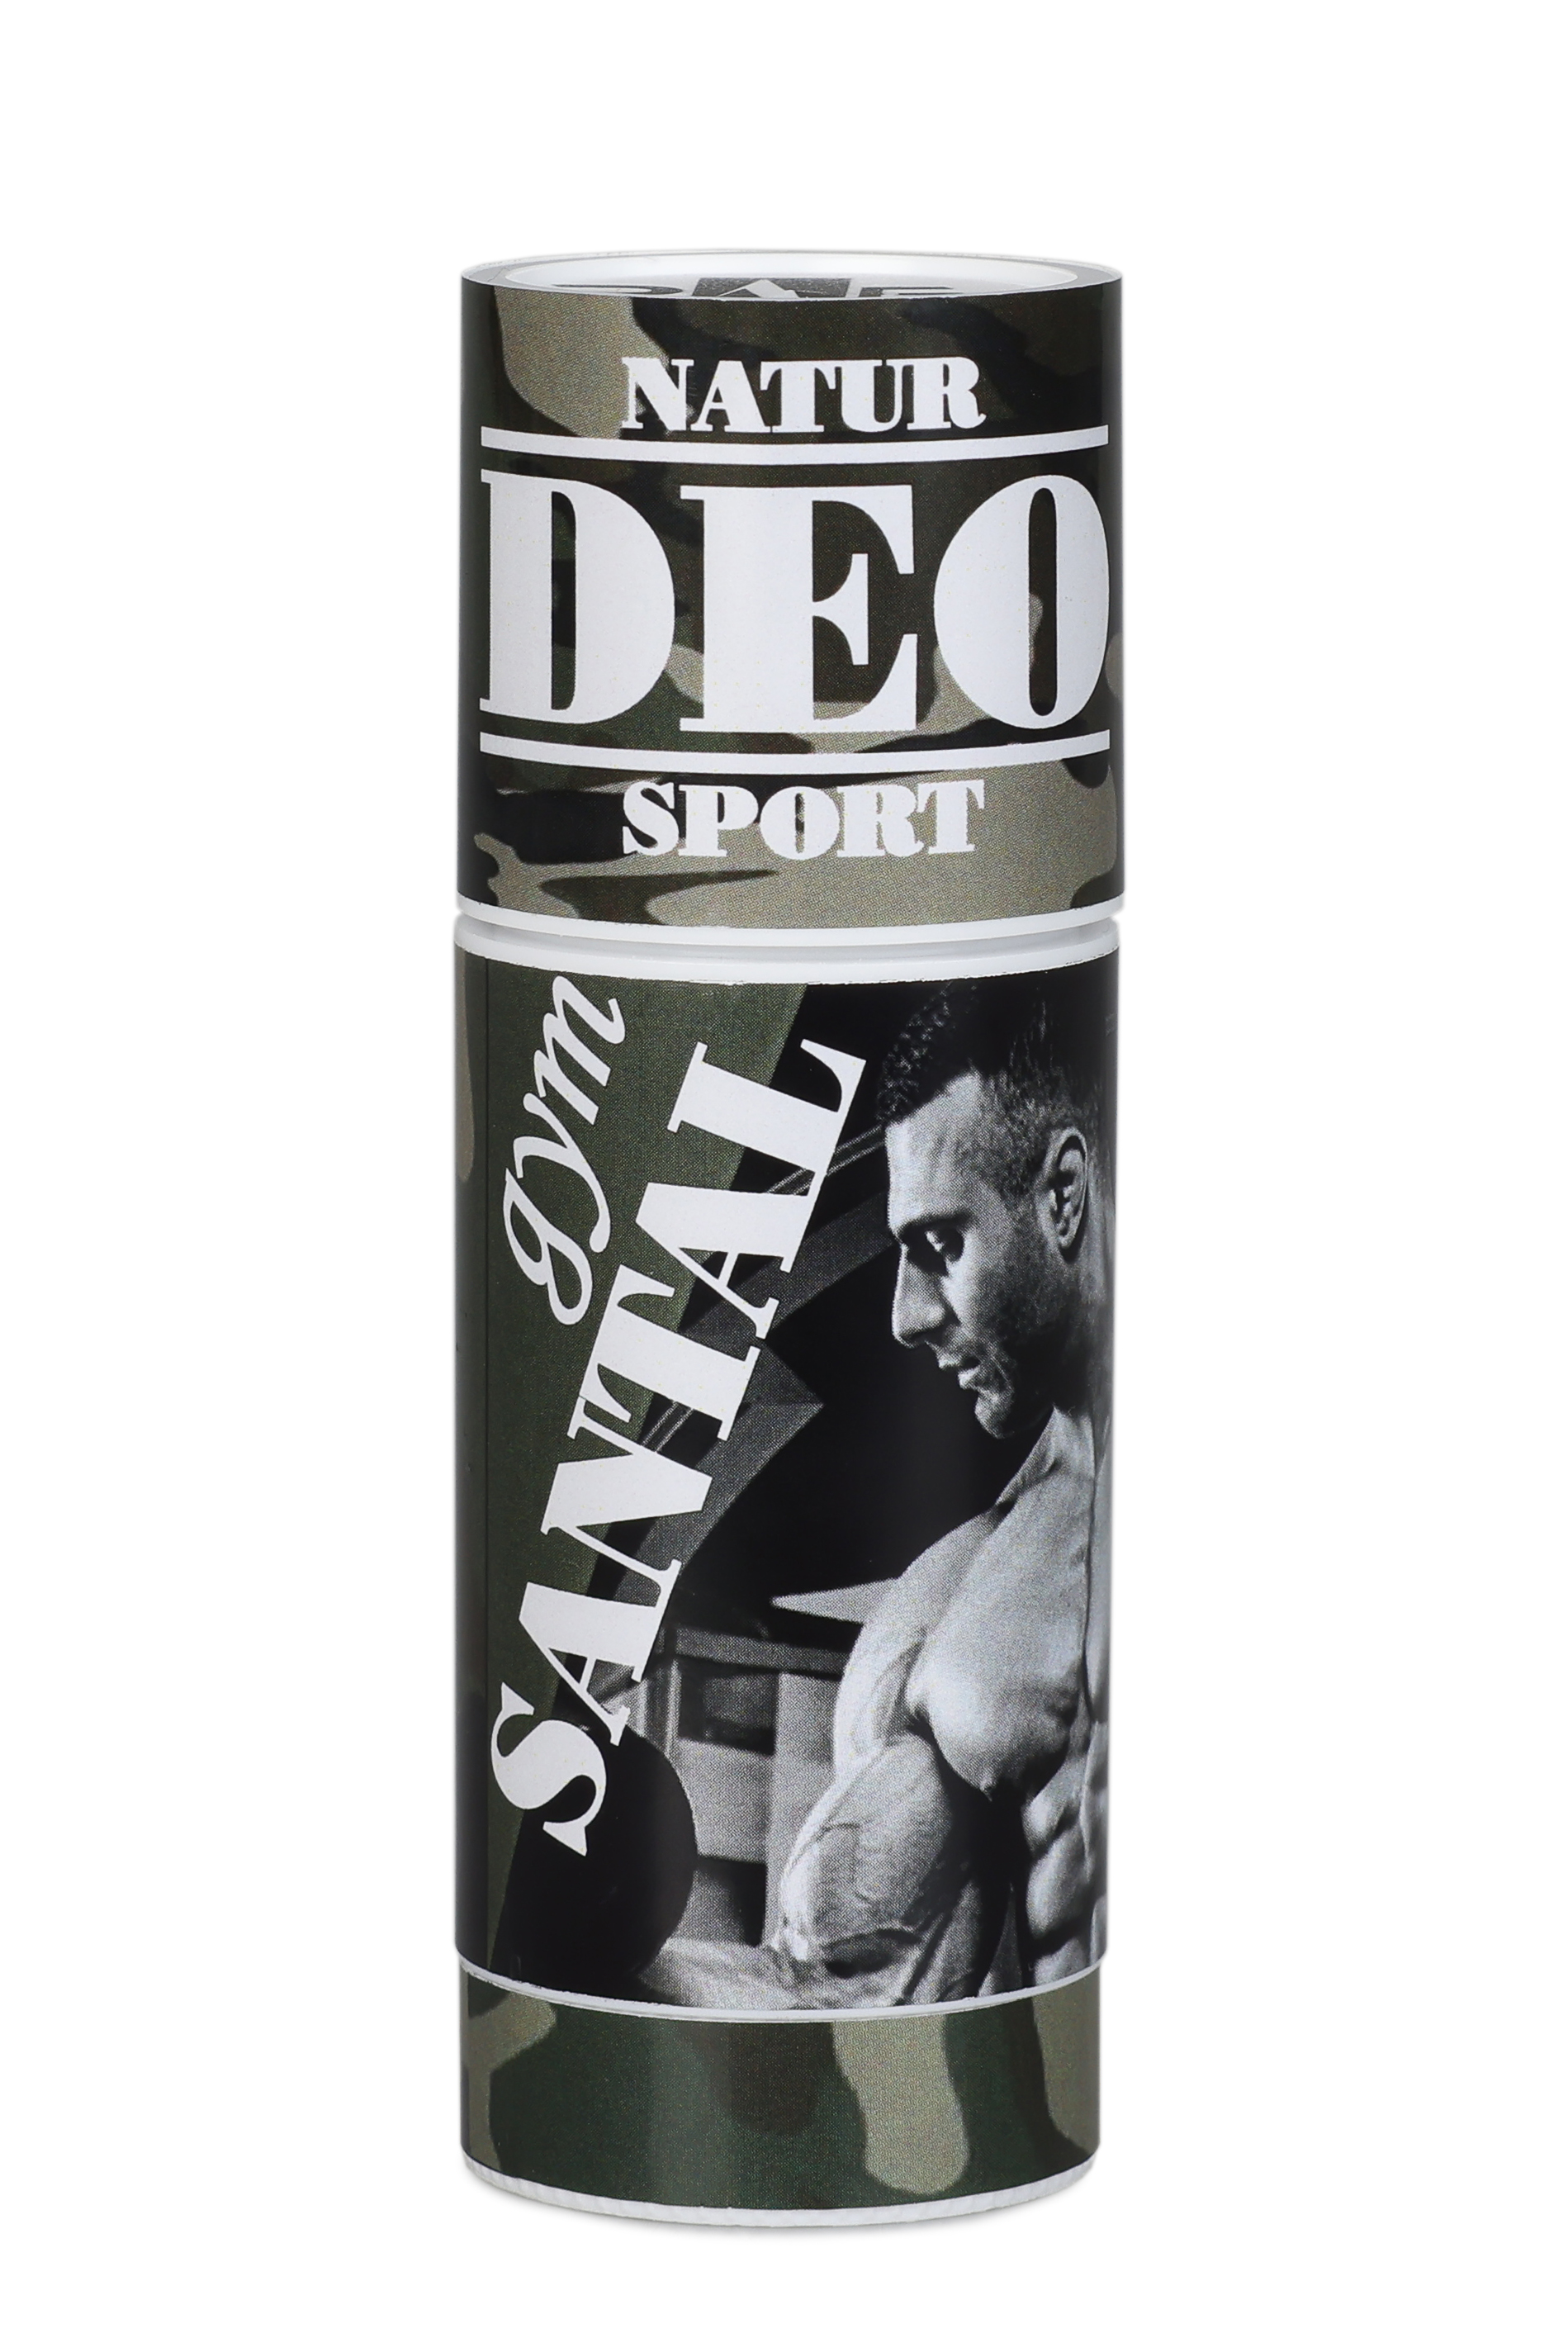 Natur šport dezodorant ARMY santal 25 ml